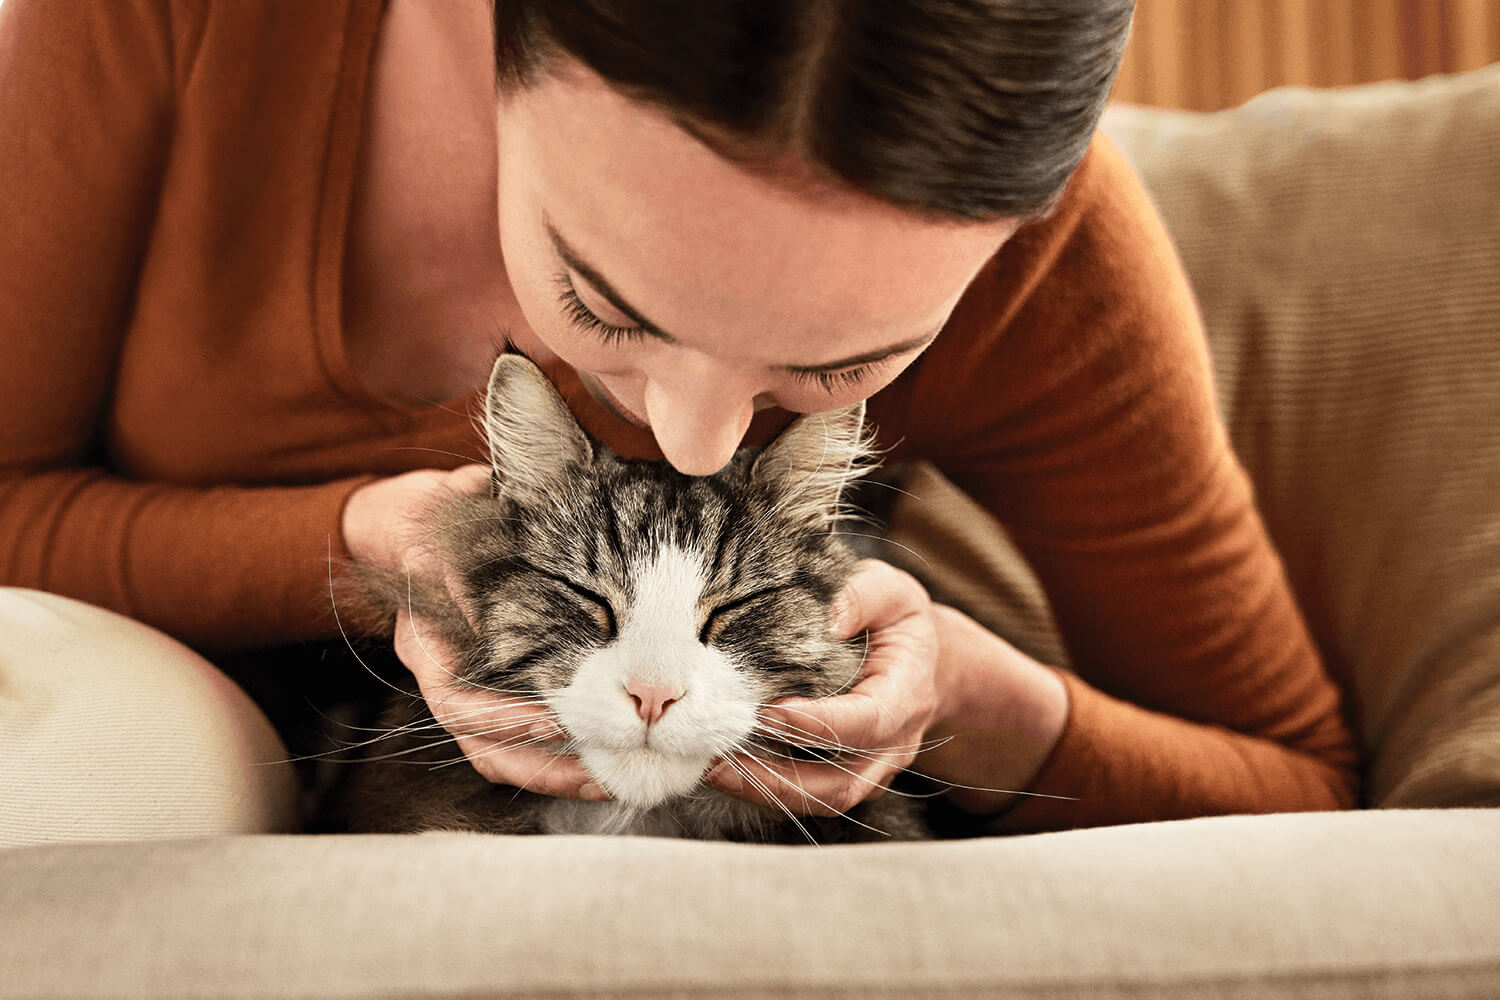 Current methods for managing cat allergens have limitations